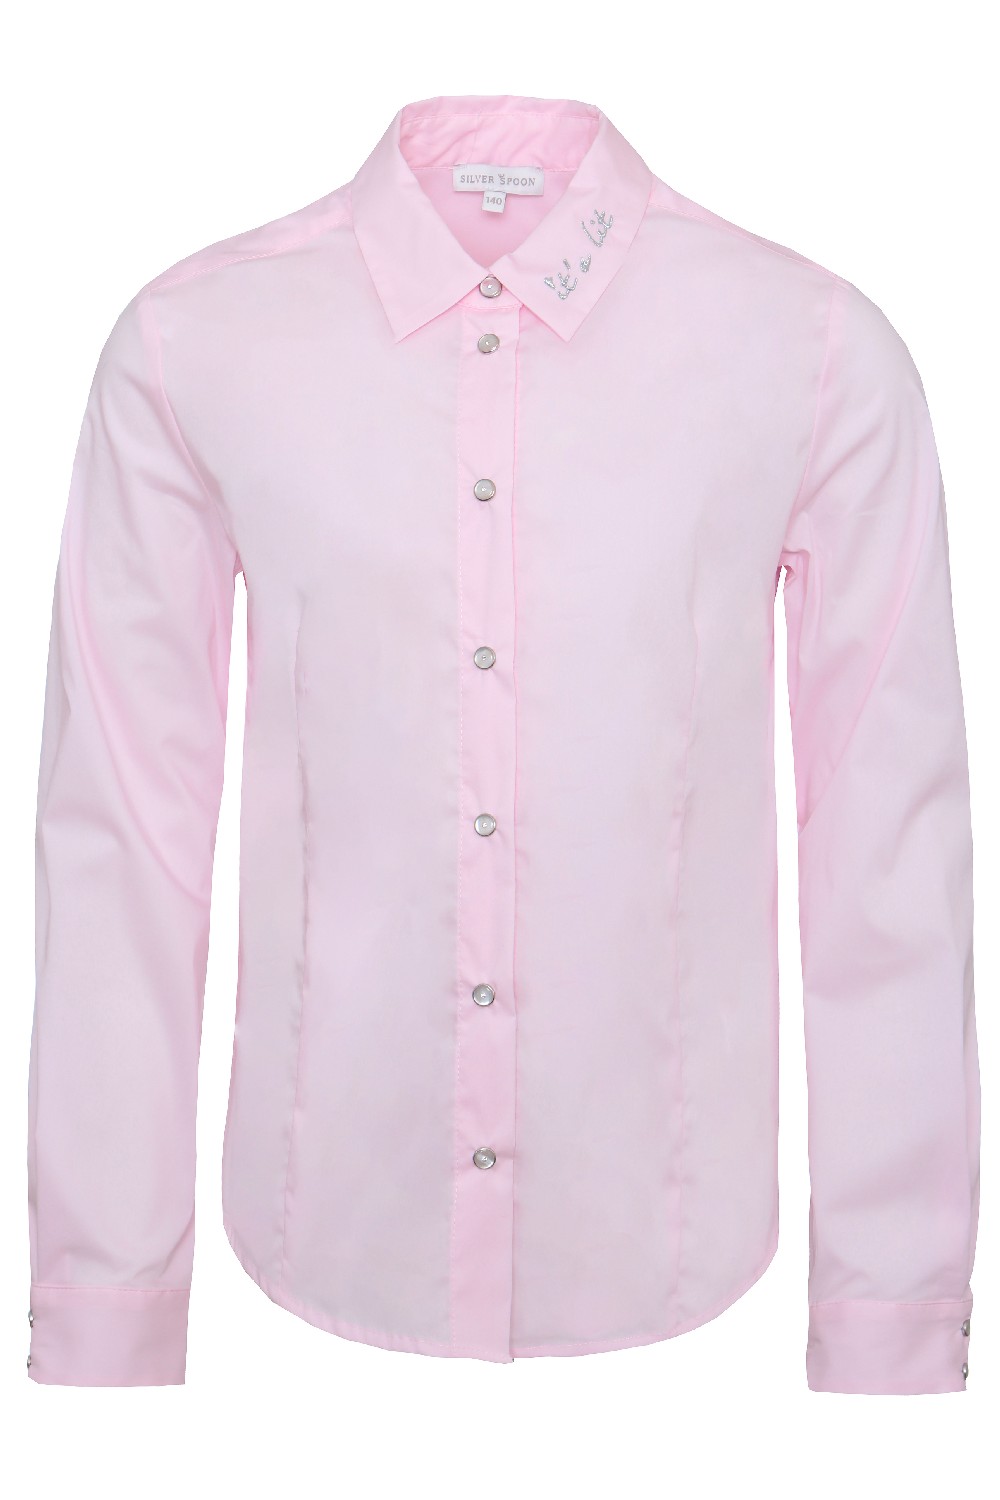 Silver Spoon Розовая рубашка